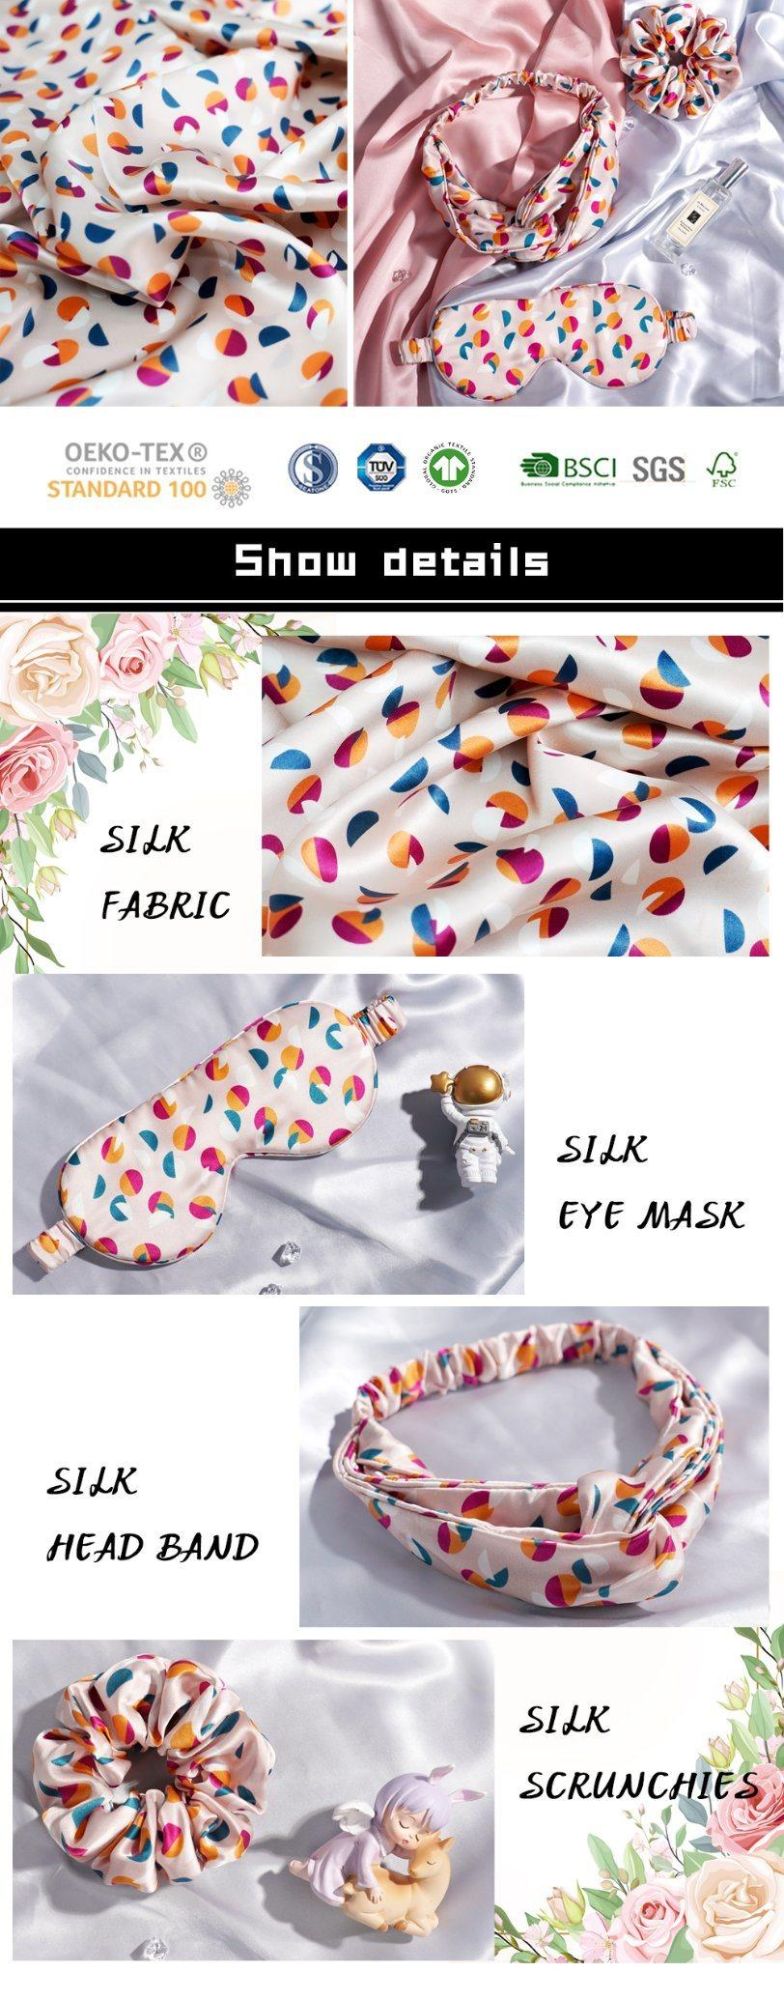 Luxury Gift Set 100% Mulberry Silk Sleeping Eye Mask Scrunchies